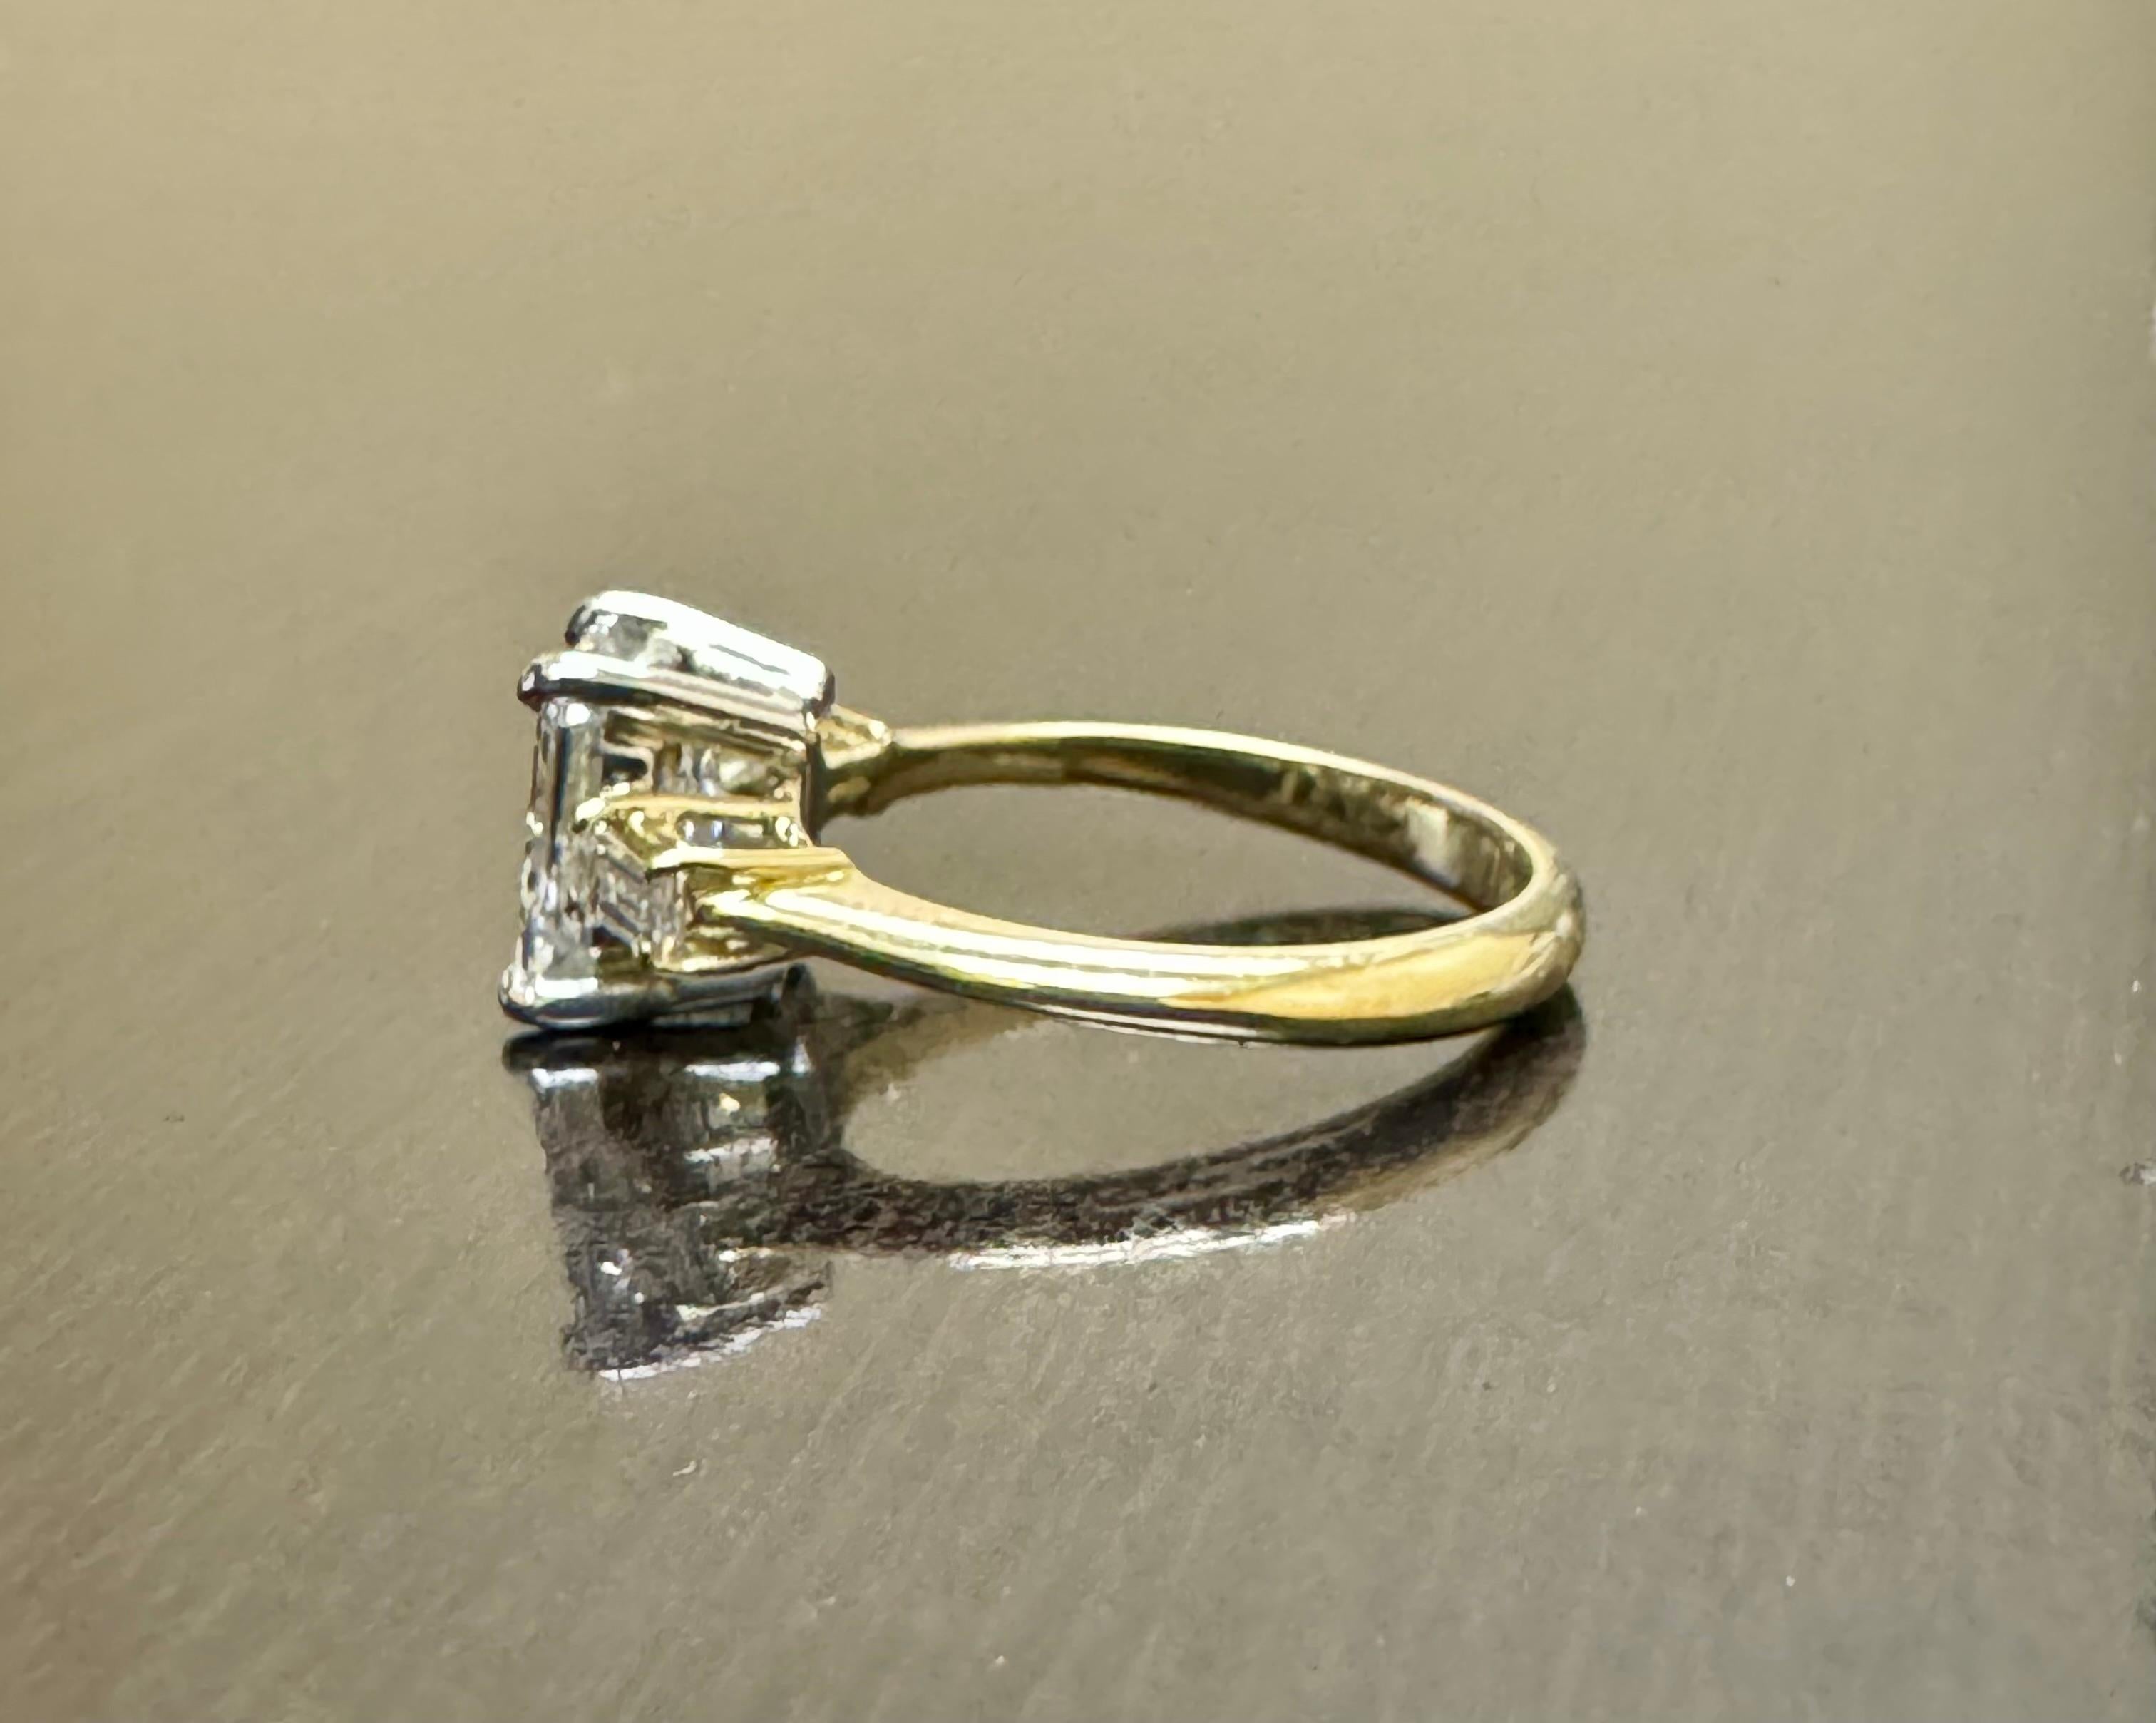 Vintage Art Deco GIA Certified 2.41 Carat Emerald Cut Diamond Engagement Ring For Sale 2